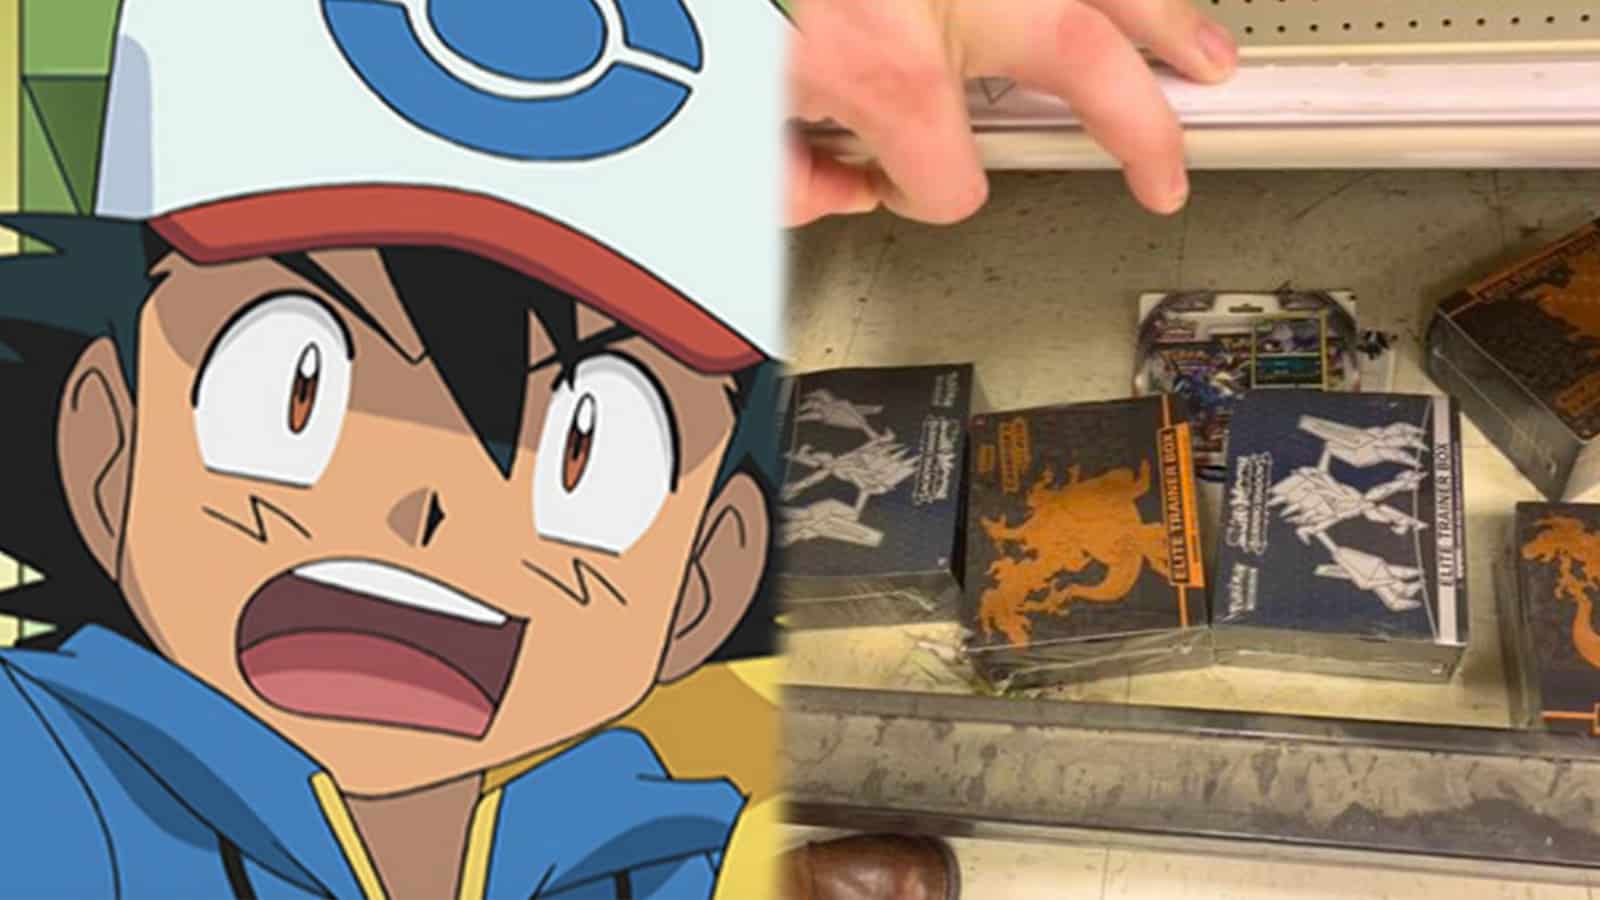 Pokemon Ash Ketchum next to Pokemon Card shelf Target